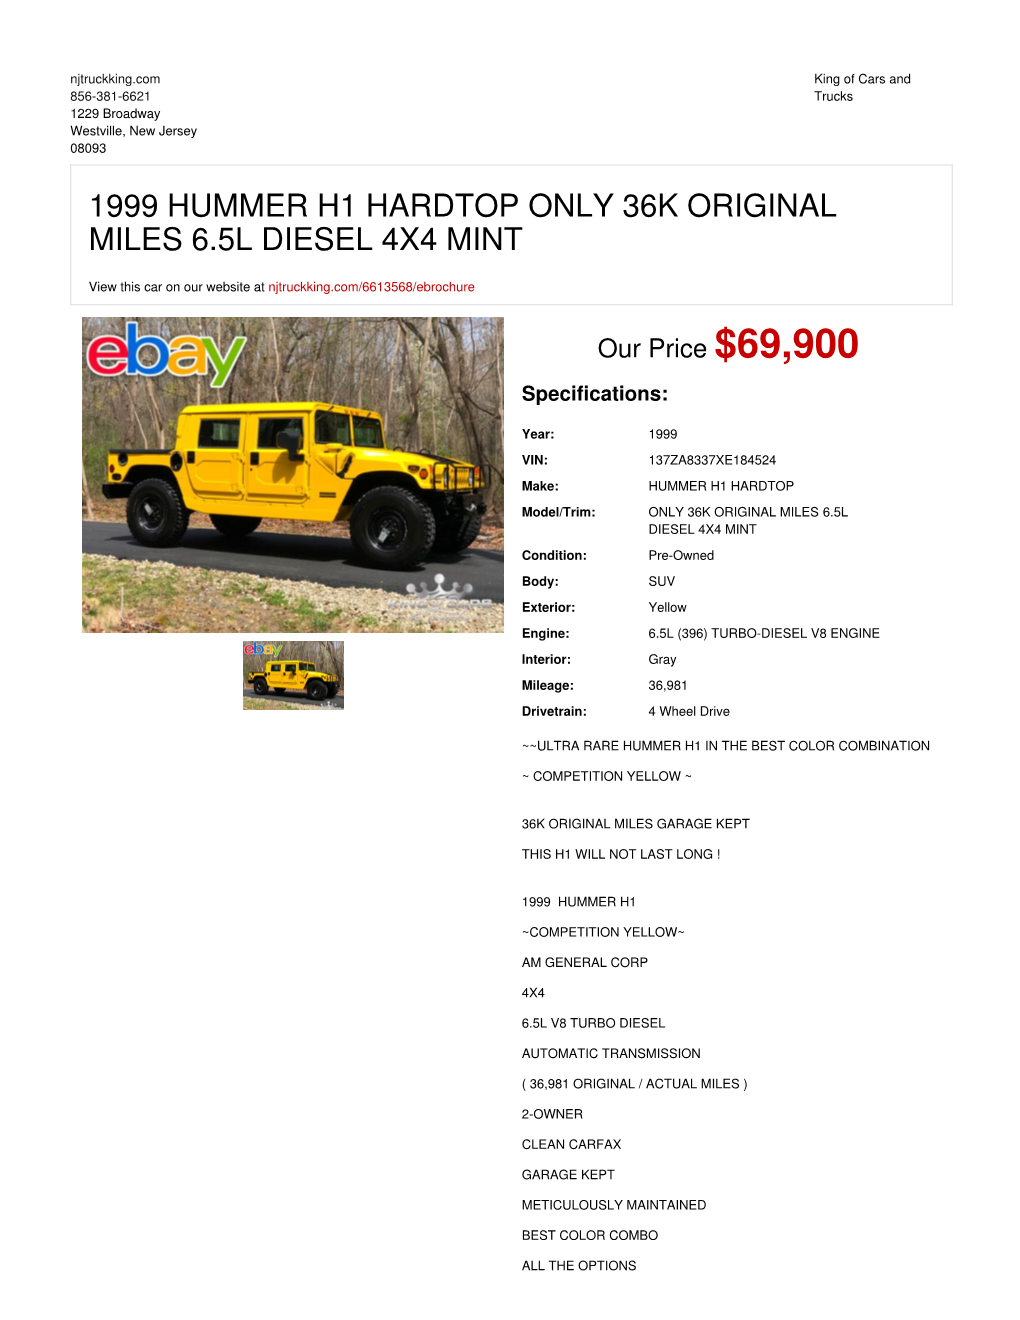 1999 HUMMER H1 HARDTOP ONLY 36K ORIGINAL MILES 6.5L DIESEL 4X4 MINT | Westville, New Jersey | King of Cars and Trucks